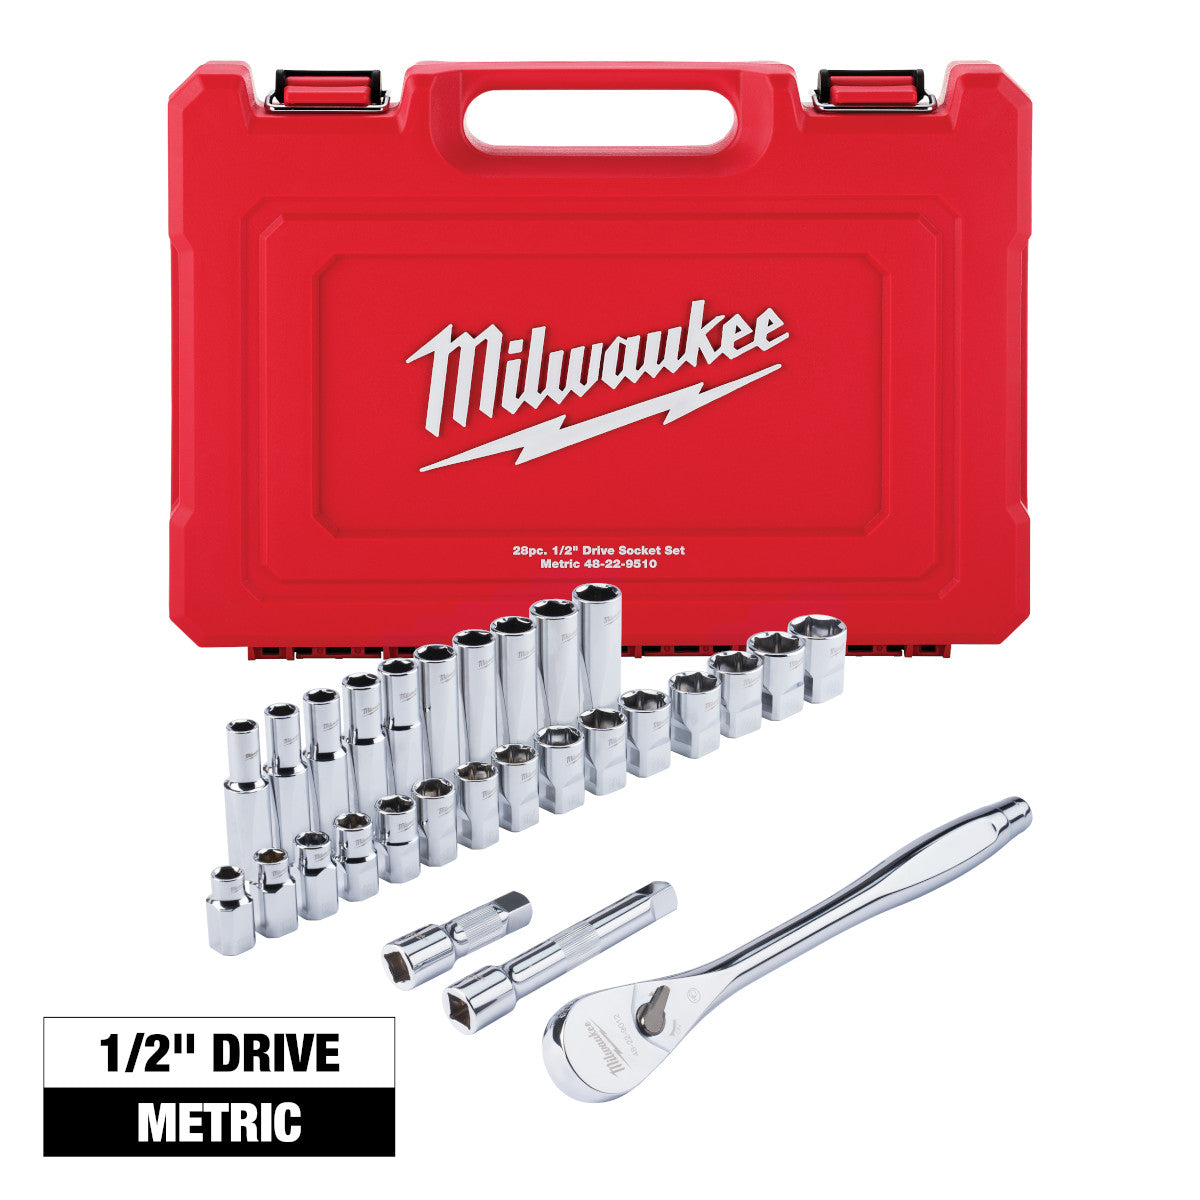 Milwaukee 48-22-9510 28-Piece Ratchet & Socket Set with FOUR FLAT Sides (1/2" Drive) (Metric) 